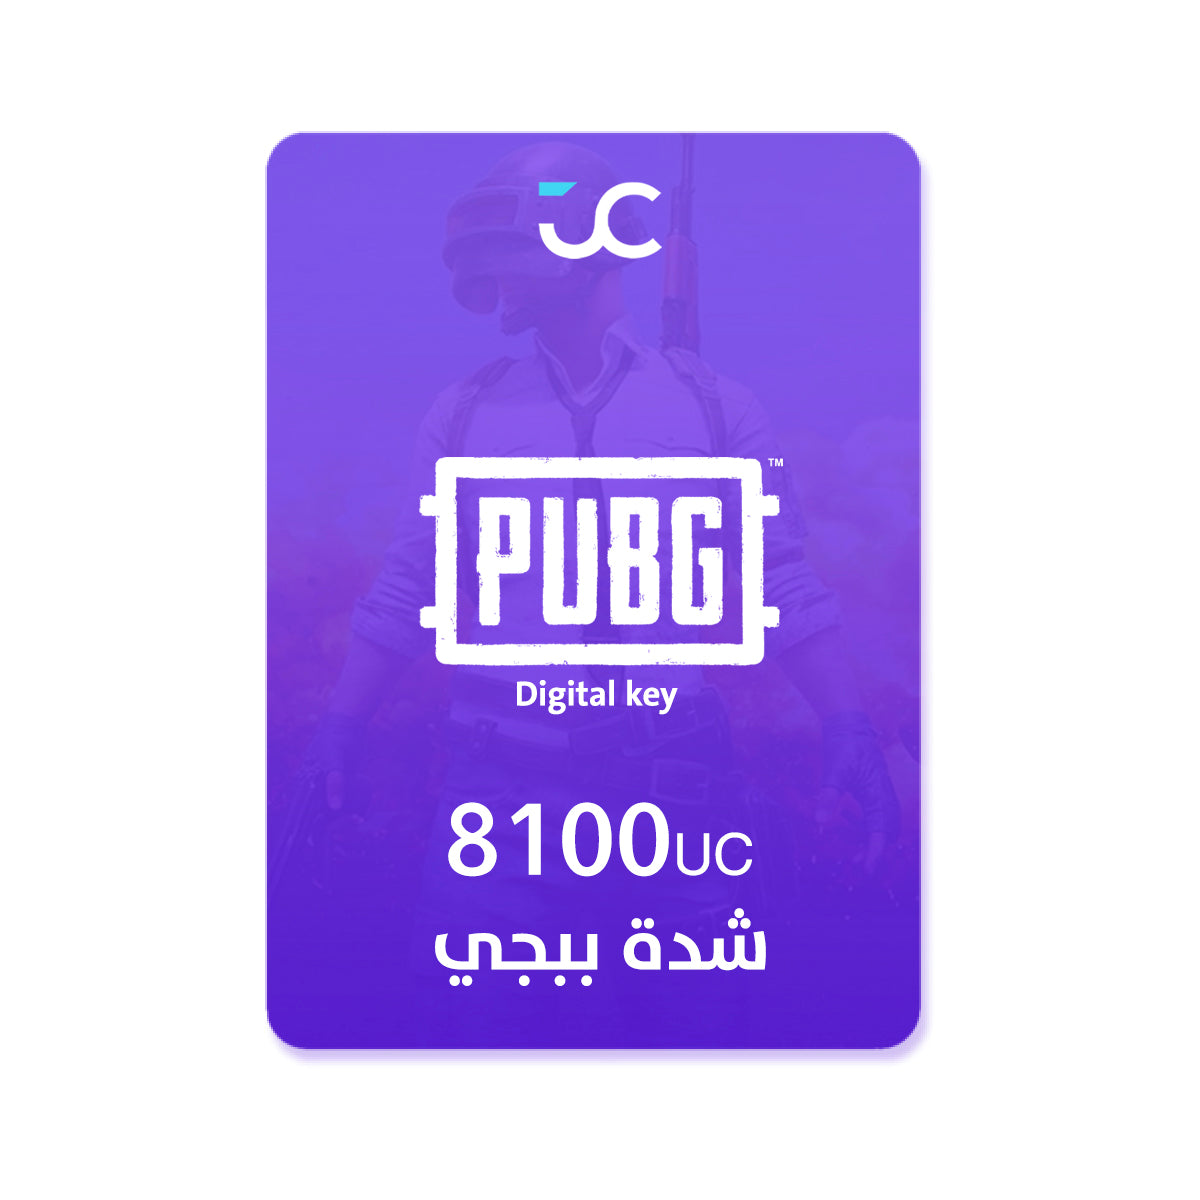 PUBG Mobile (Android+IOS) (Digital) 8100 UC